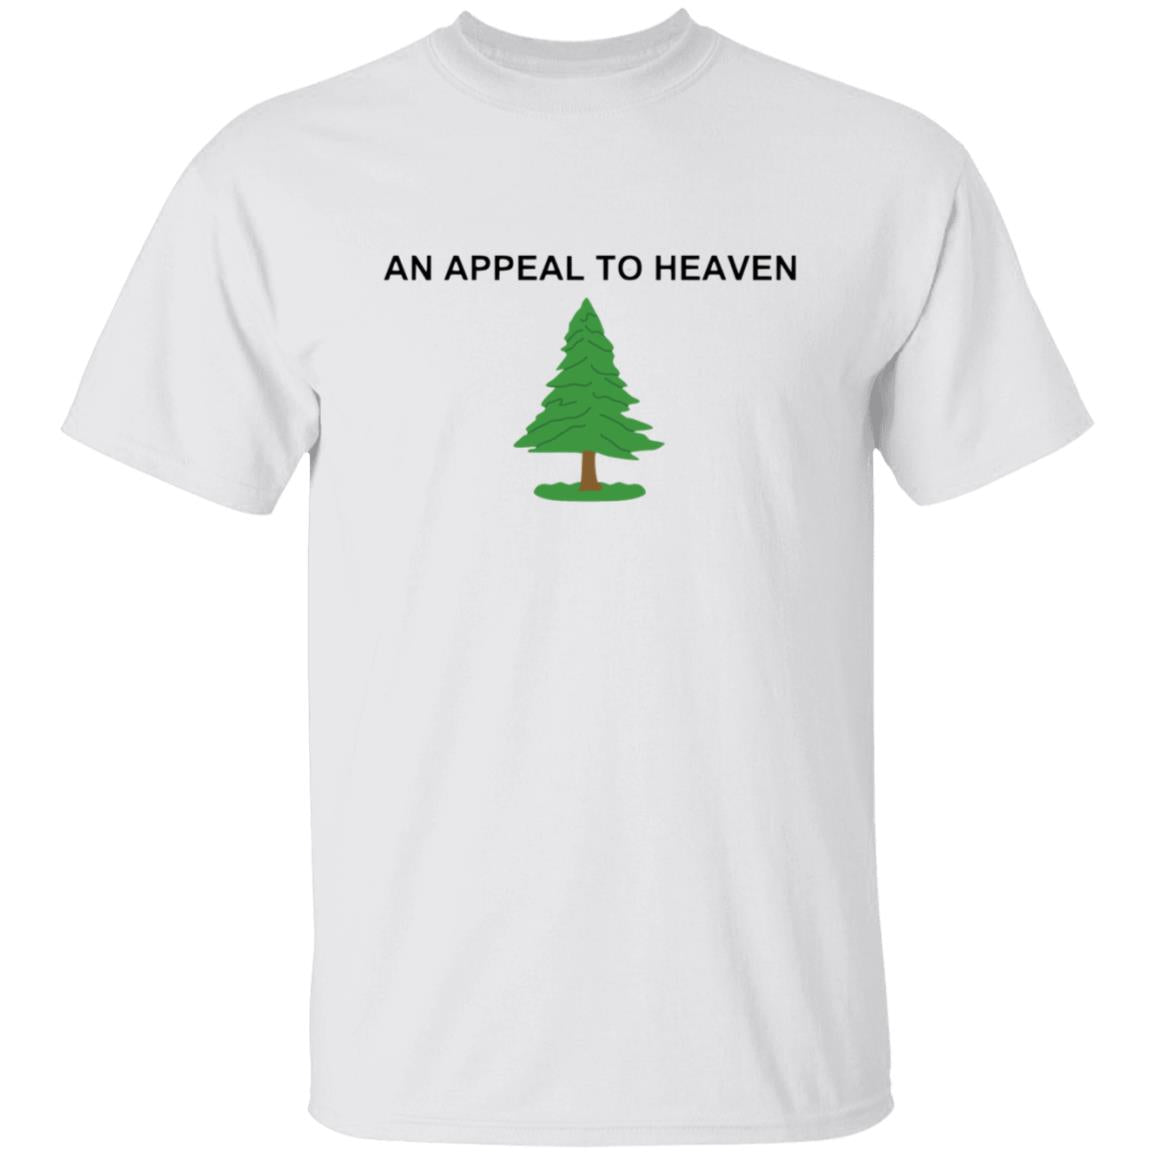 An Appeal to Heaven 5.3 oz. T-Shirt - Mercantile Mountain